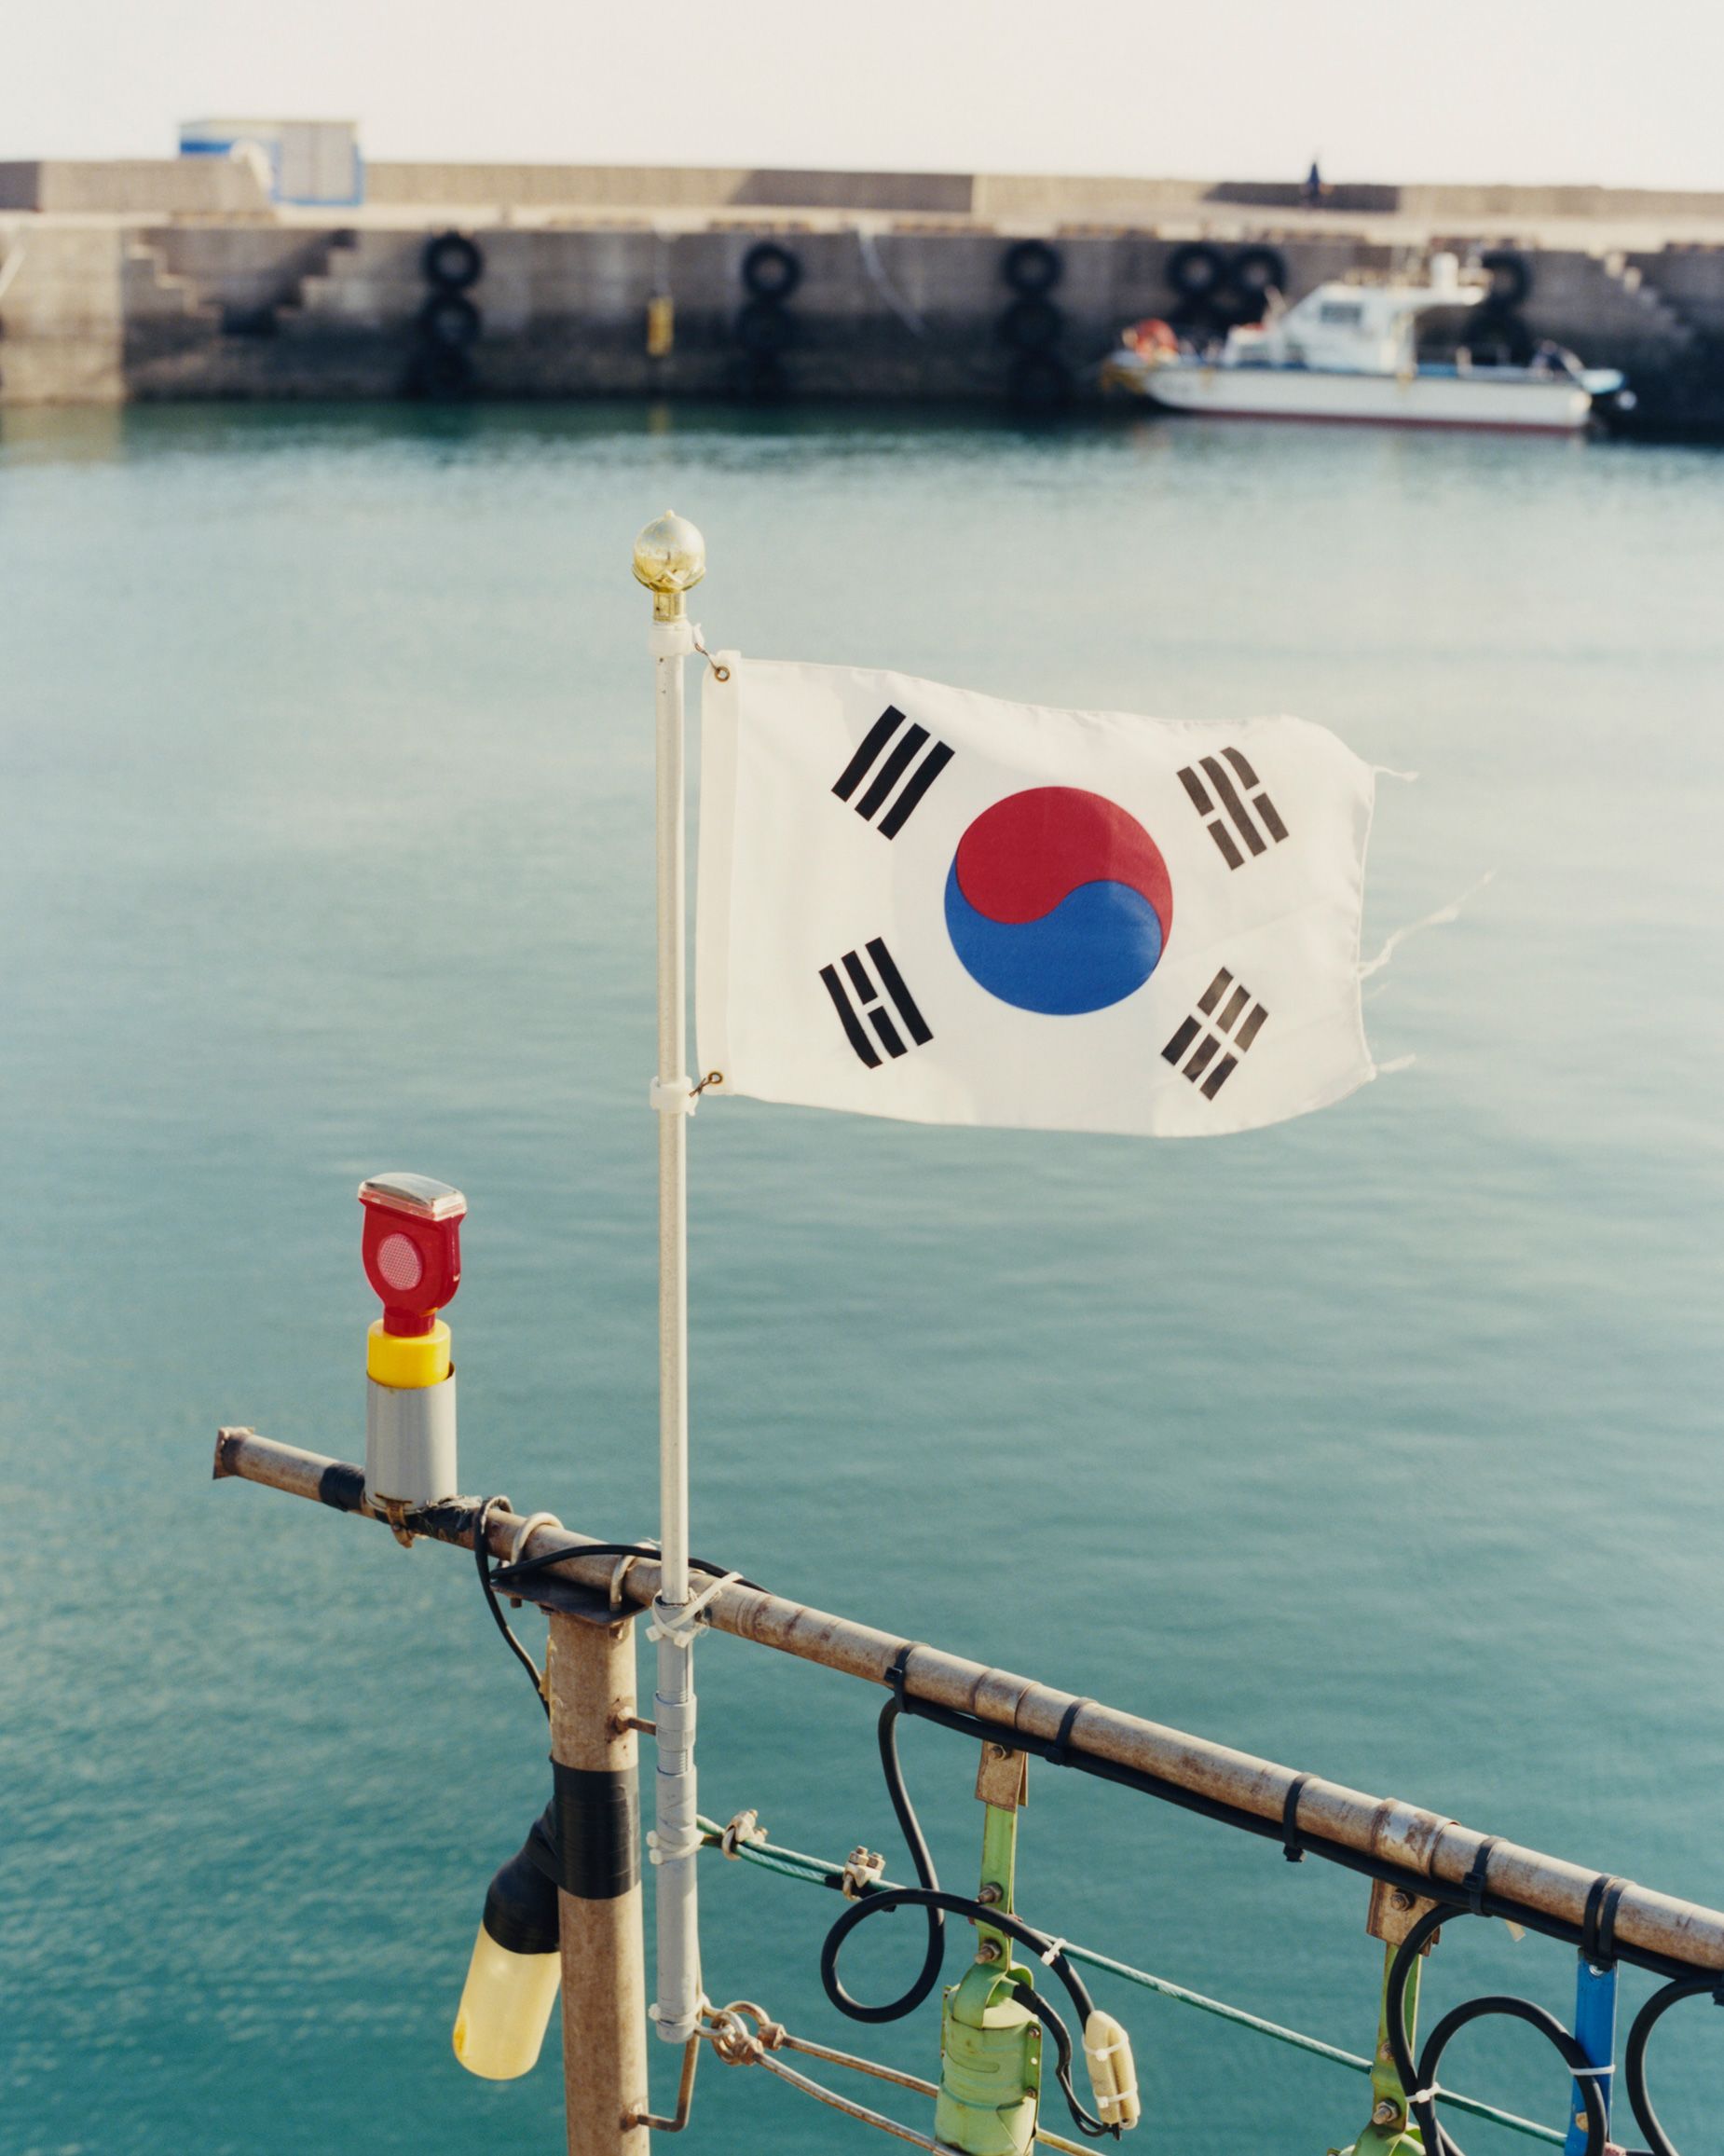 The Korean flag flutter in a sea breeze.